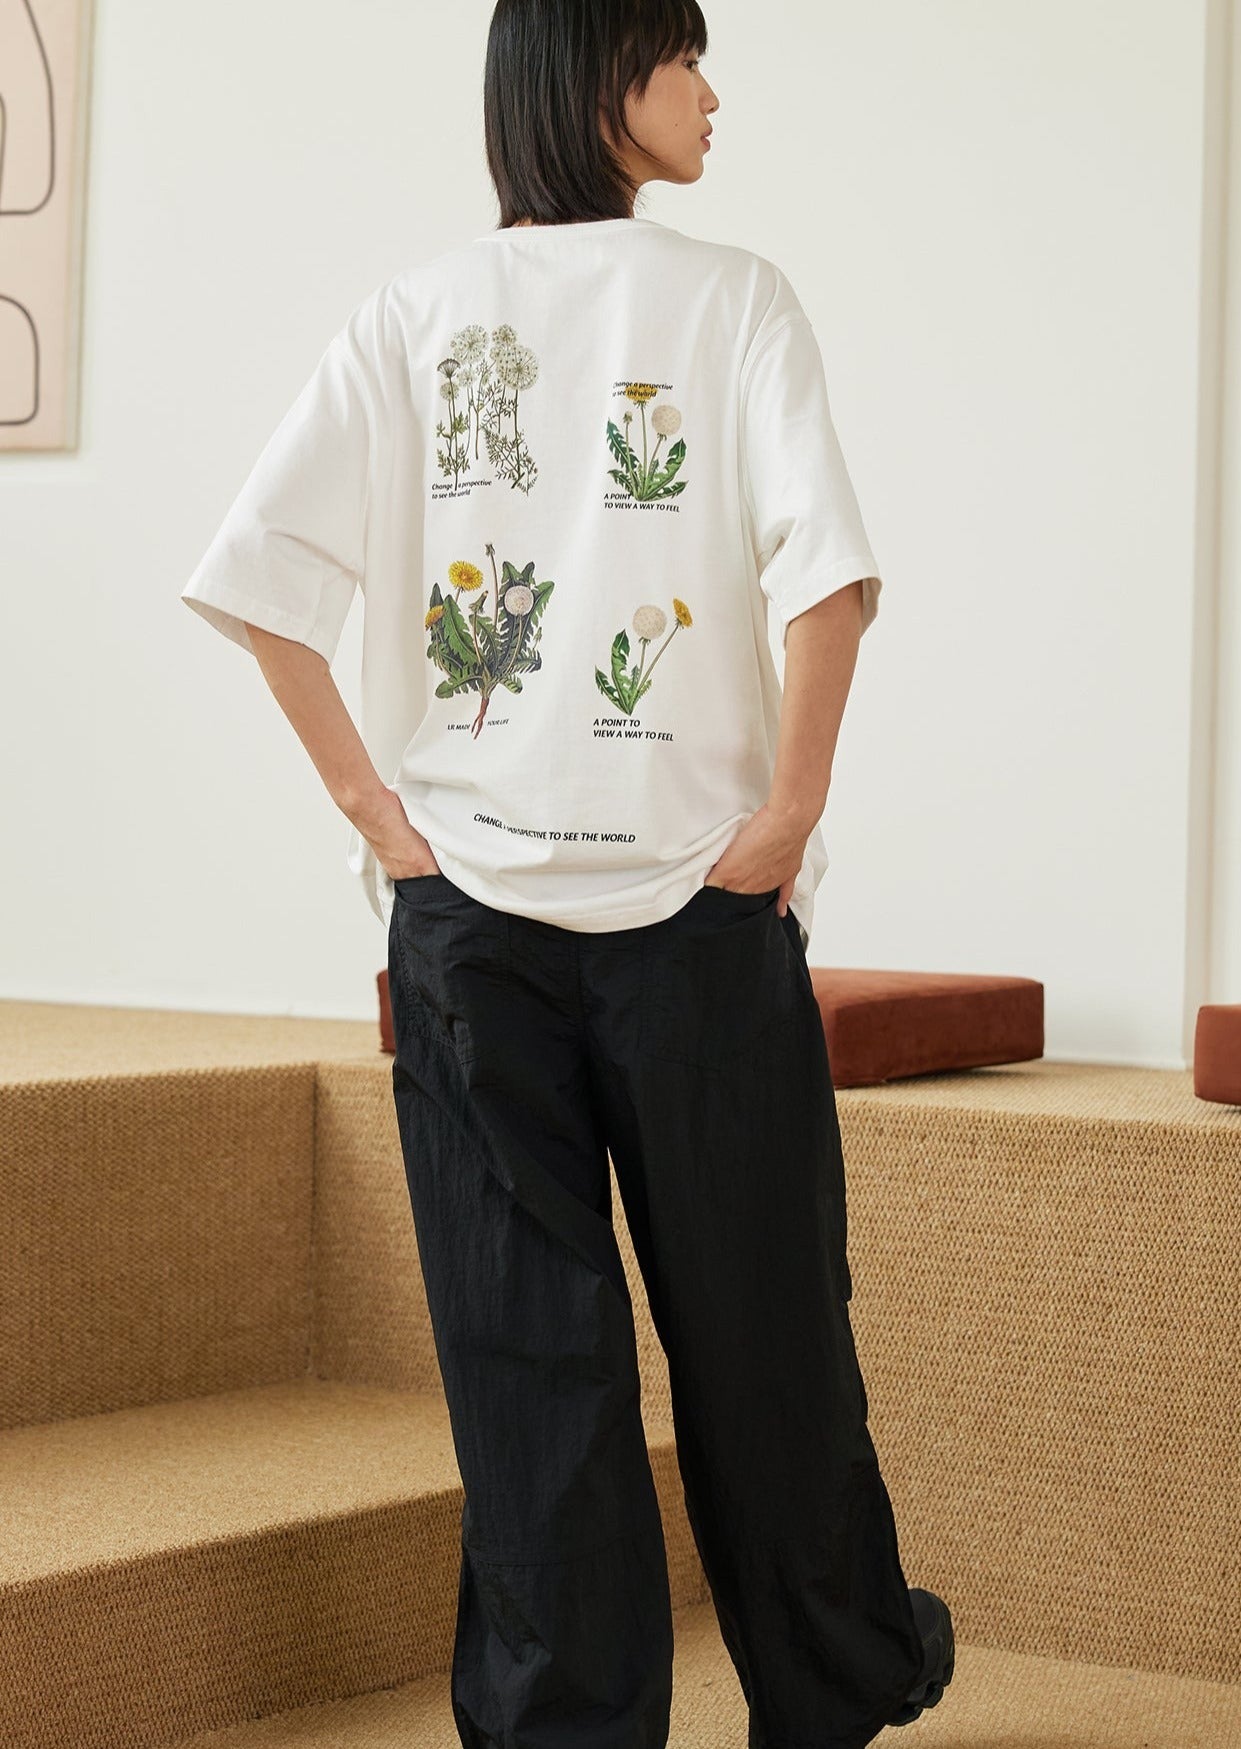 LR MADE / FS-165 Floral Digital Printed Short Sleeve T-Shirt